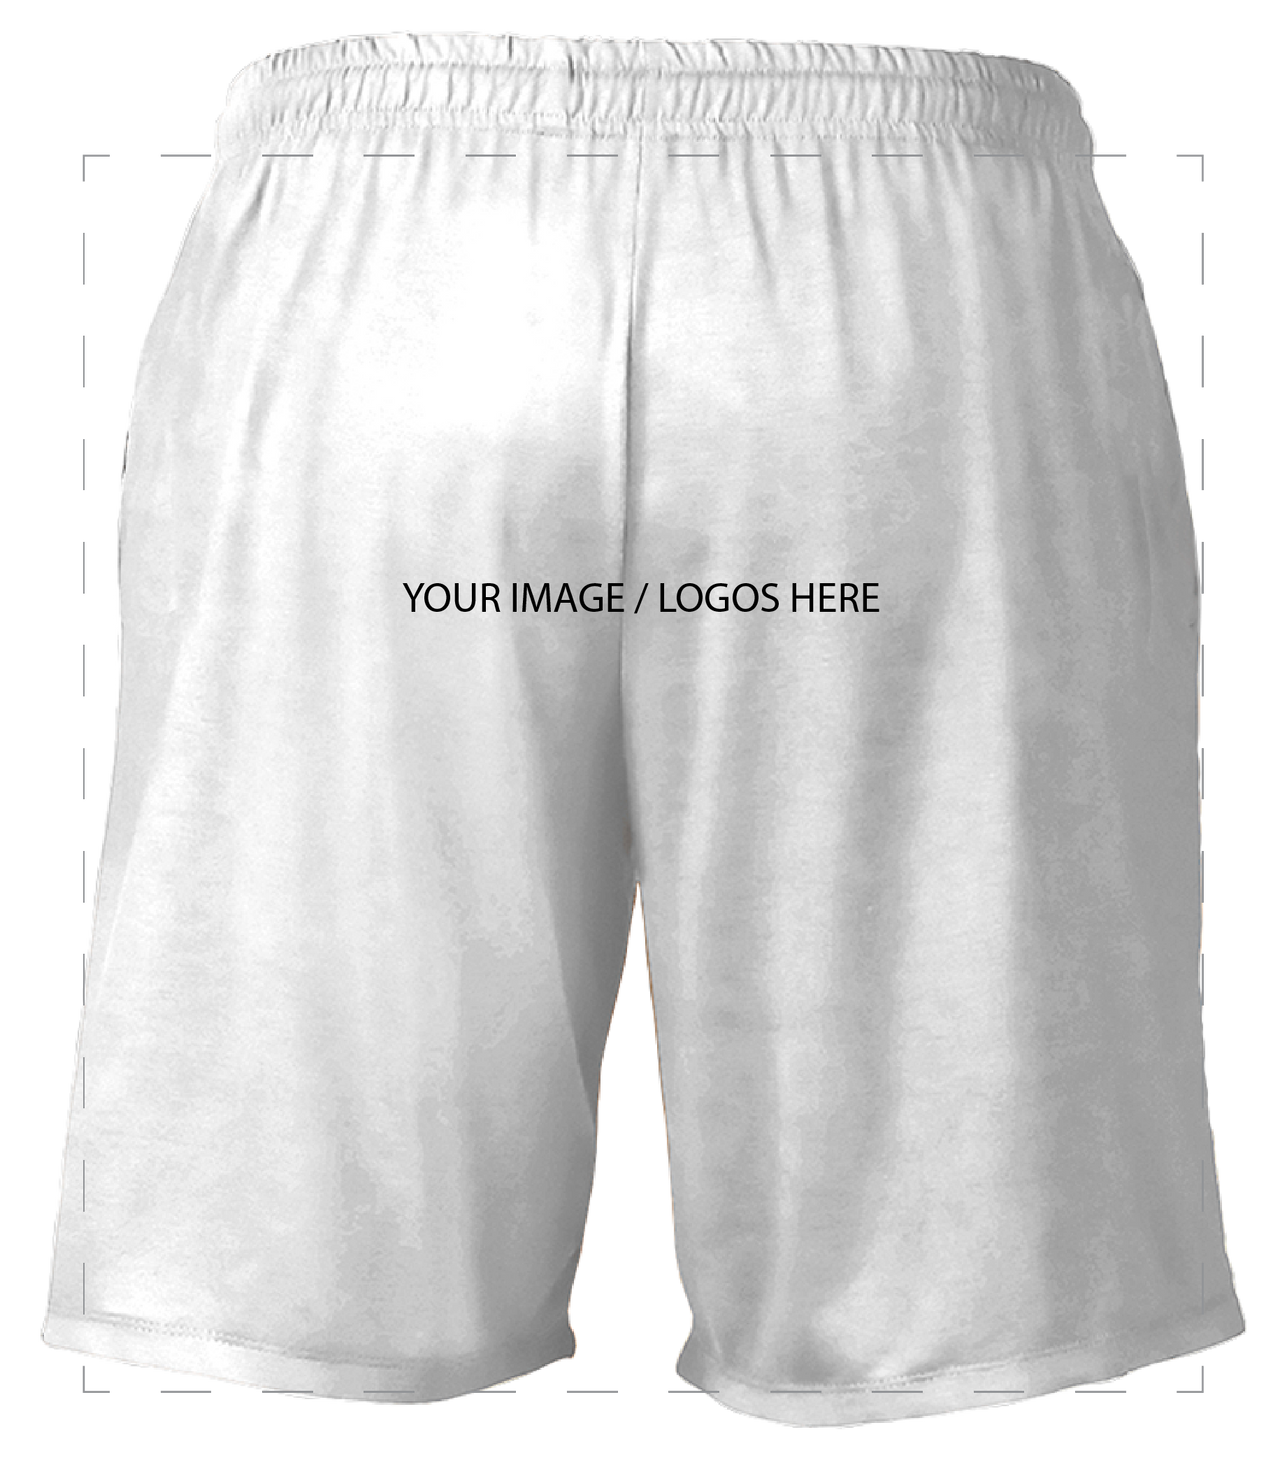 team shorts custom made online where to buy